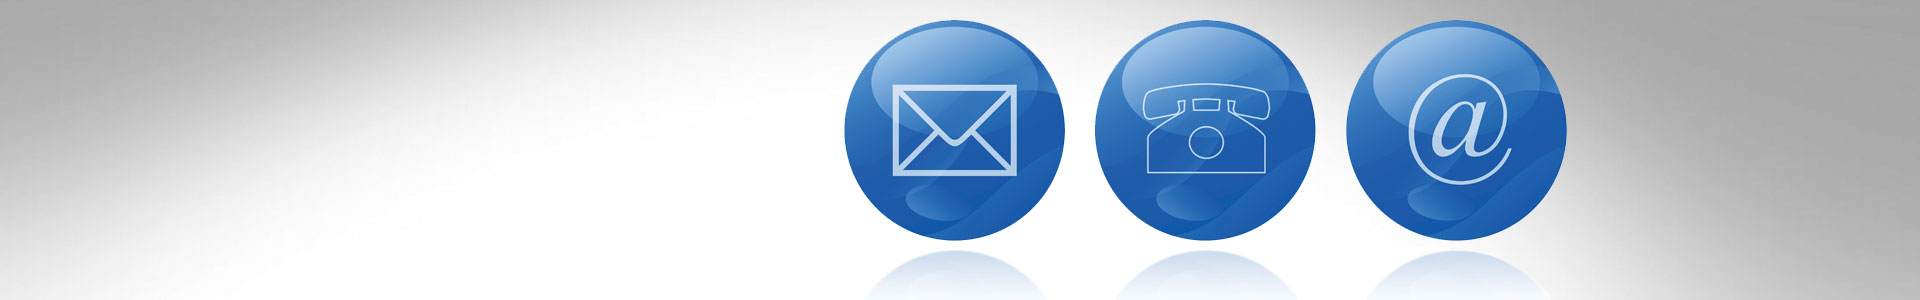 email phone and at symbols